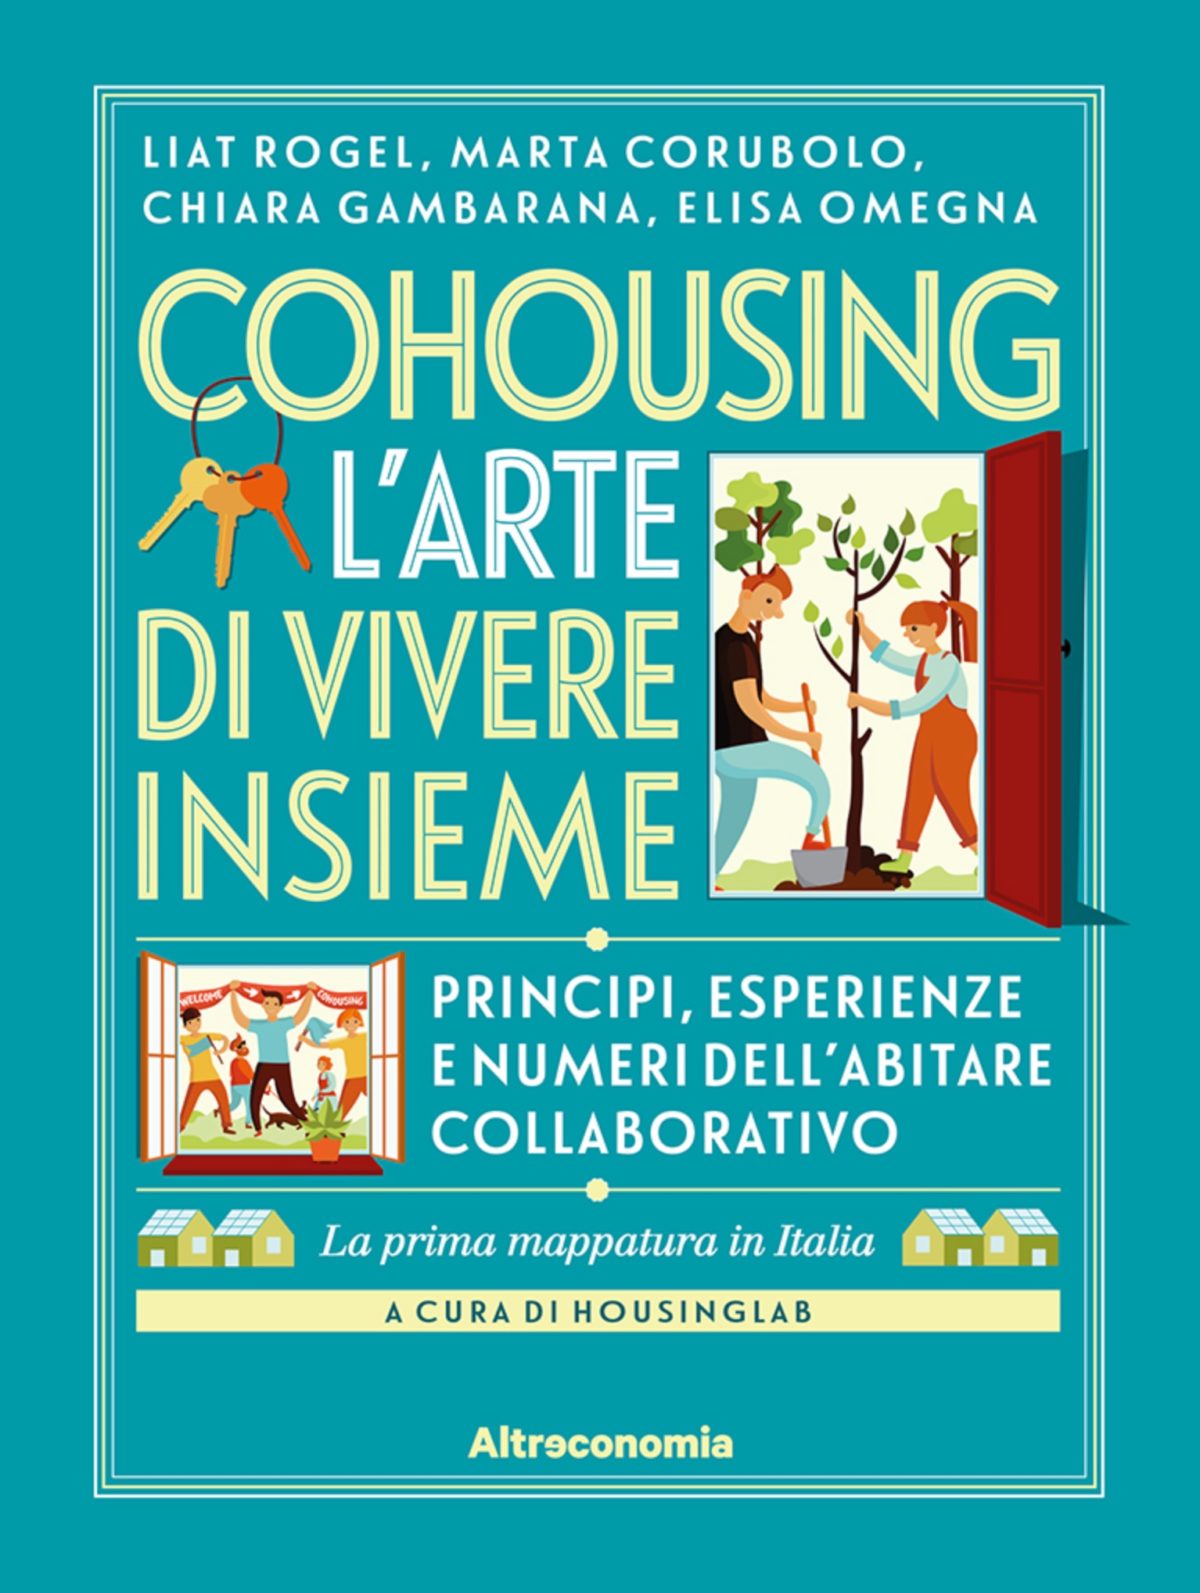 30 cohousingprojekt i Italien!